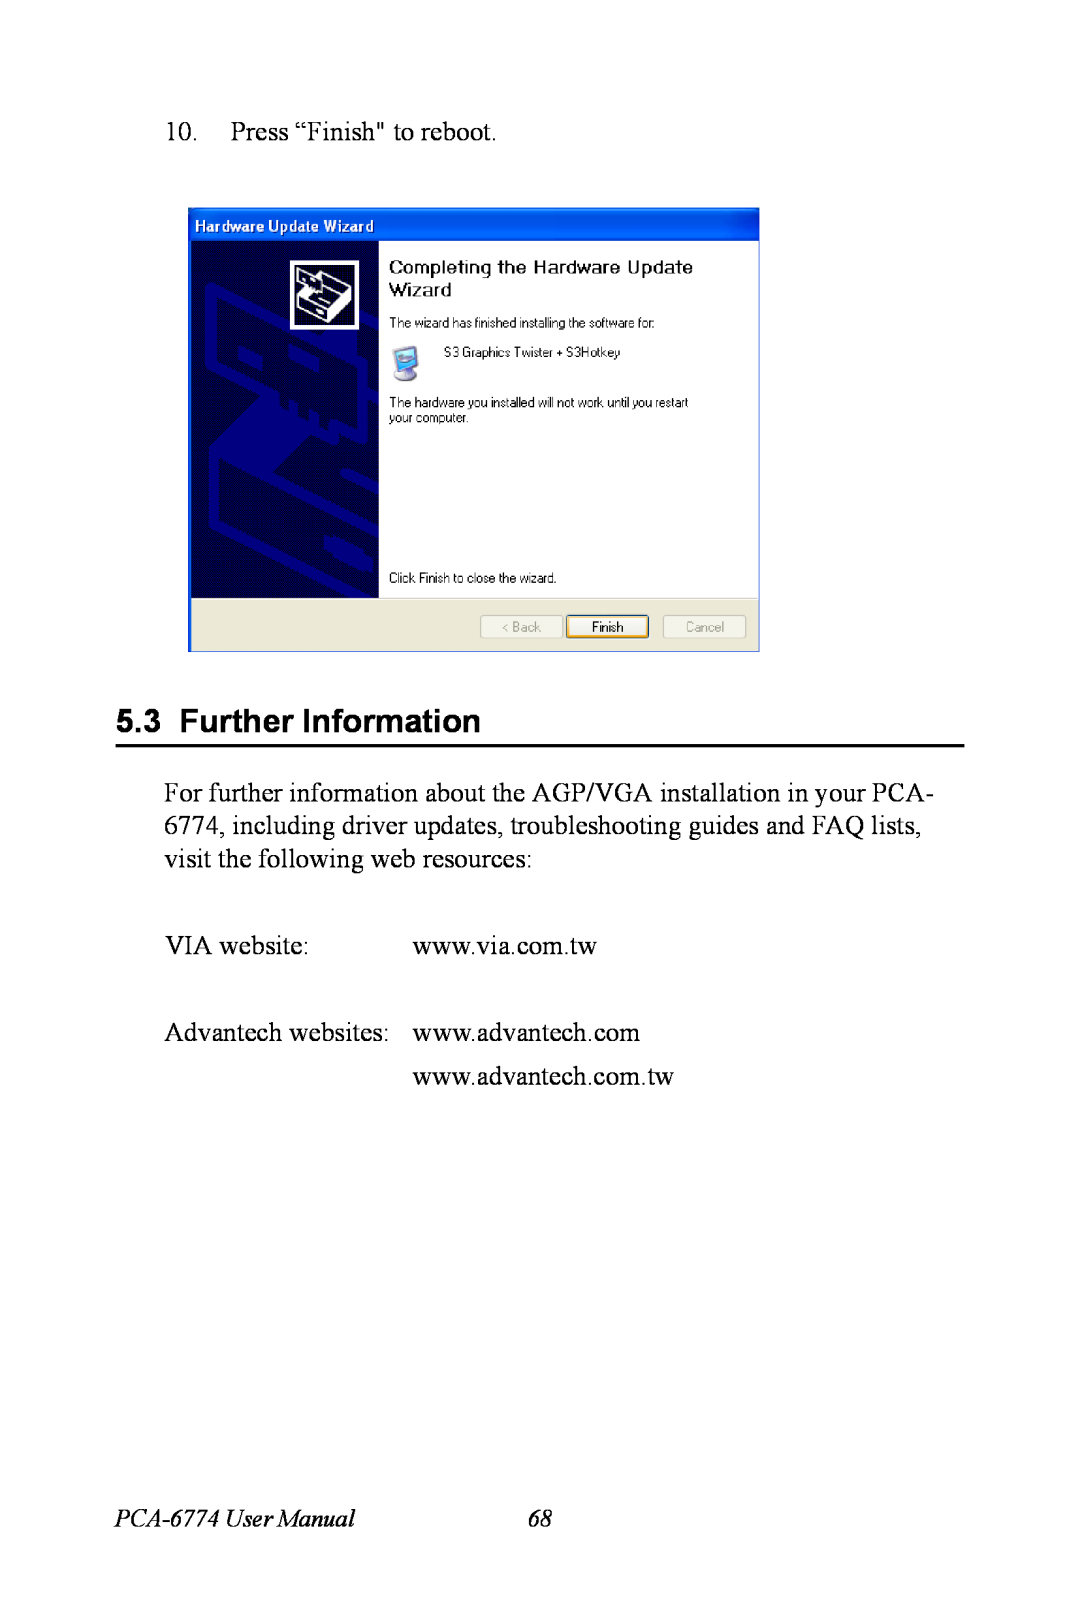 Advantech user manual Further Information, Press “Finish to reboot, VIA website, PCA-6774 User Manual 